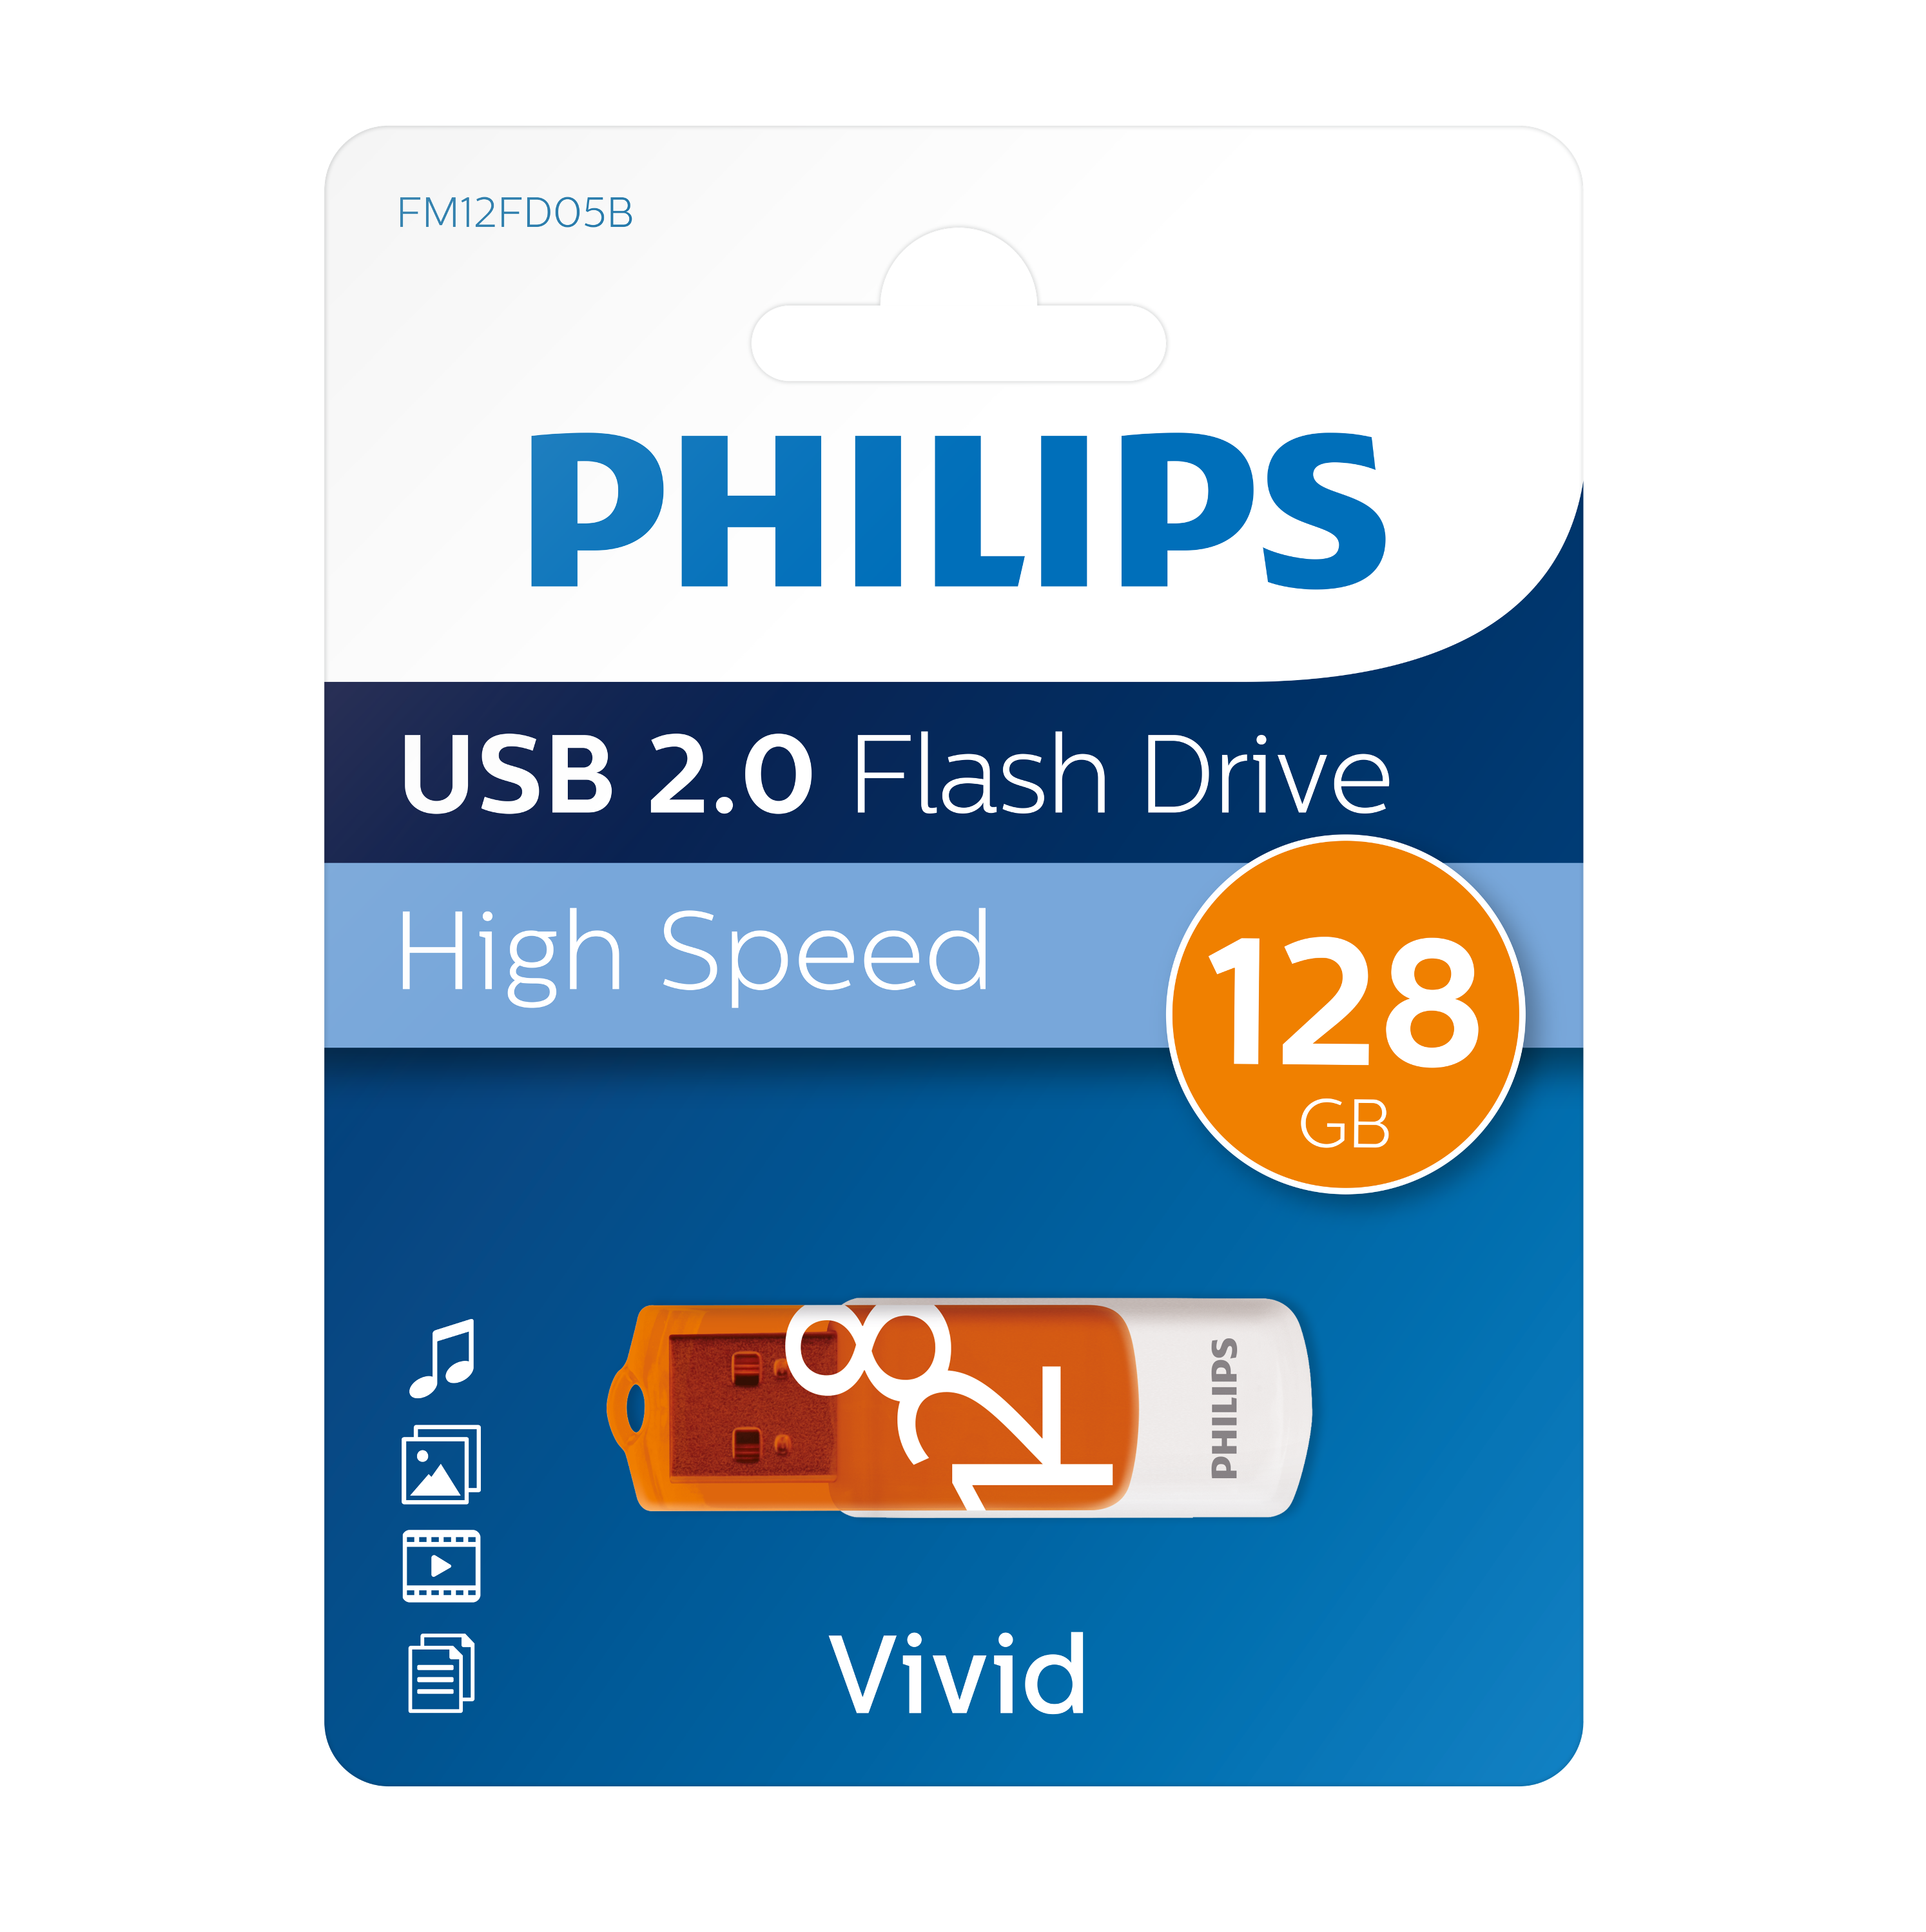 PHILIPS Vivid Orange®, GB) 25 128 Edition USB-Stick MB/s (Weiß, Sunrise